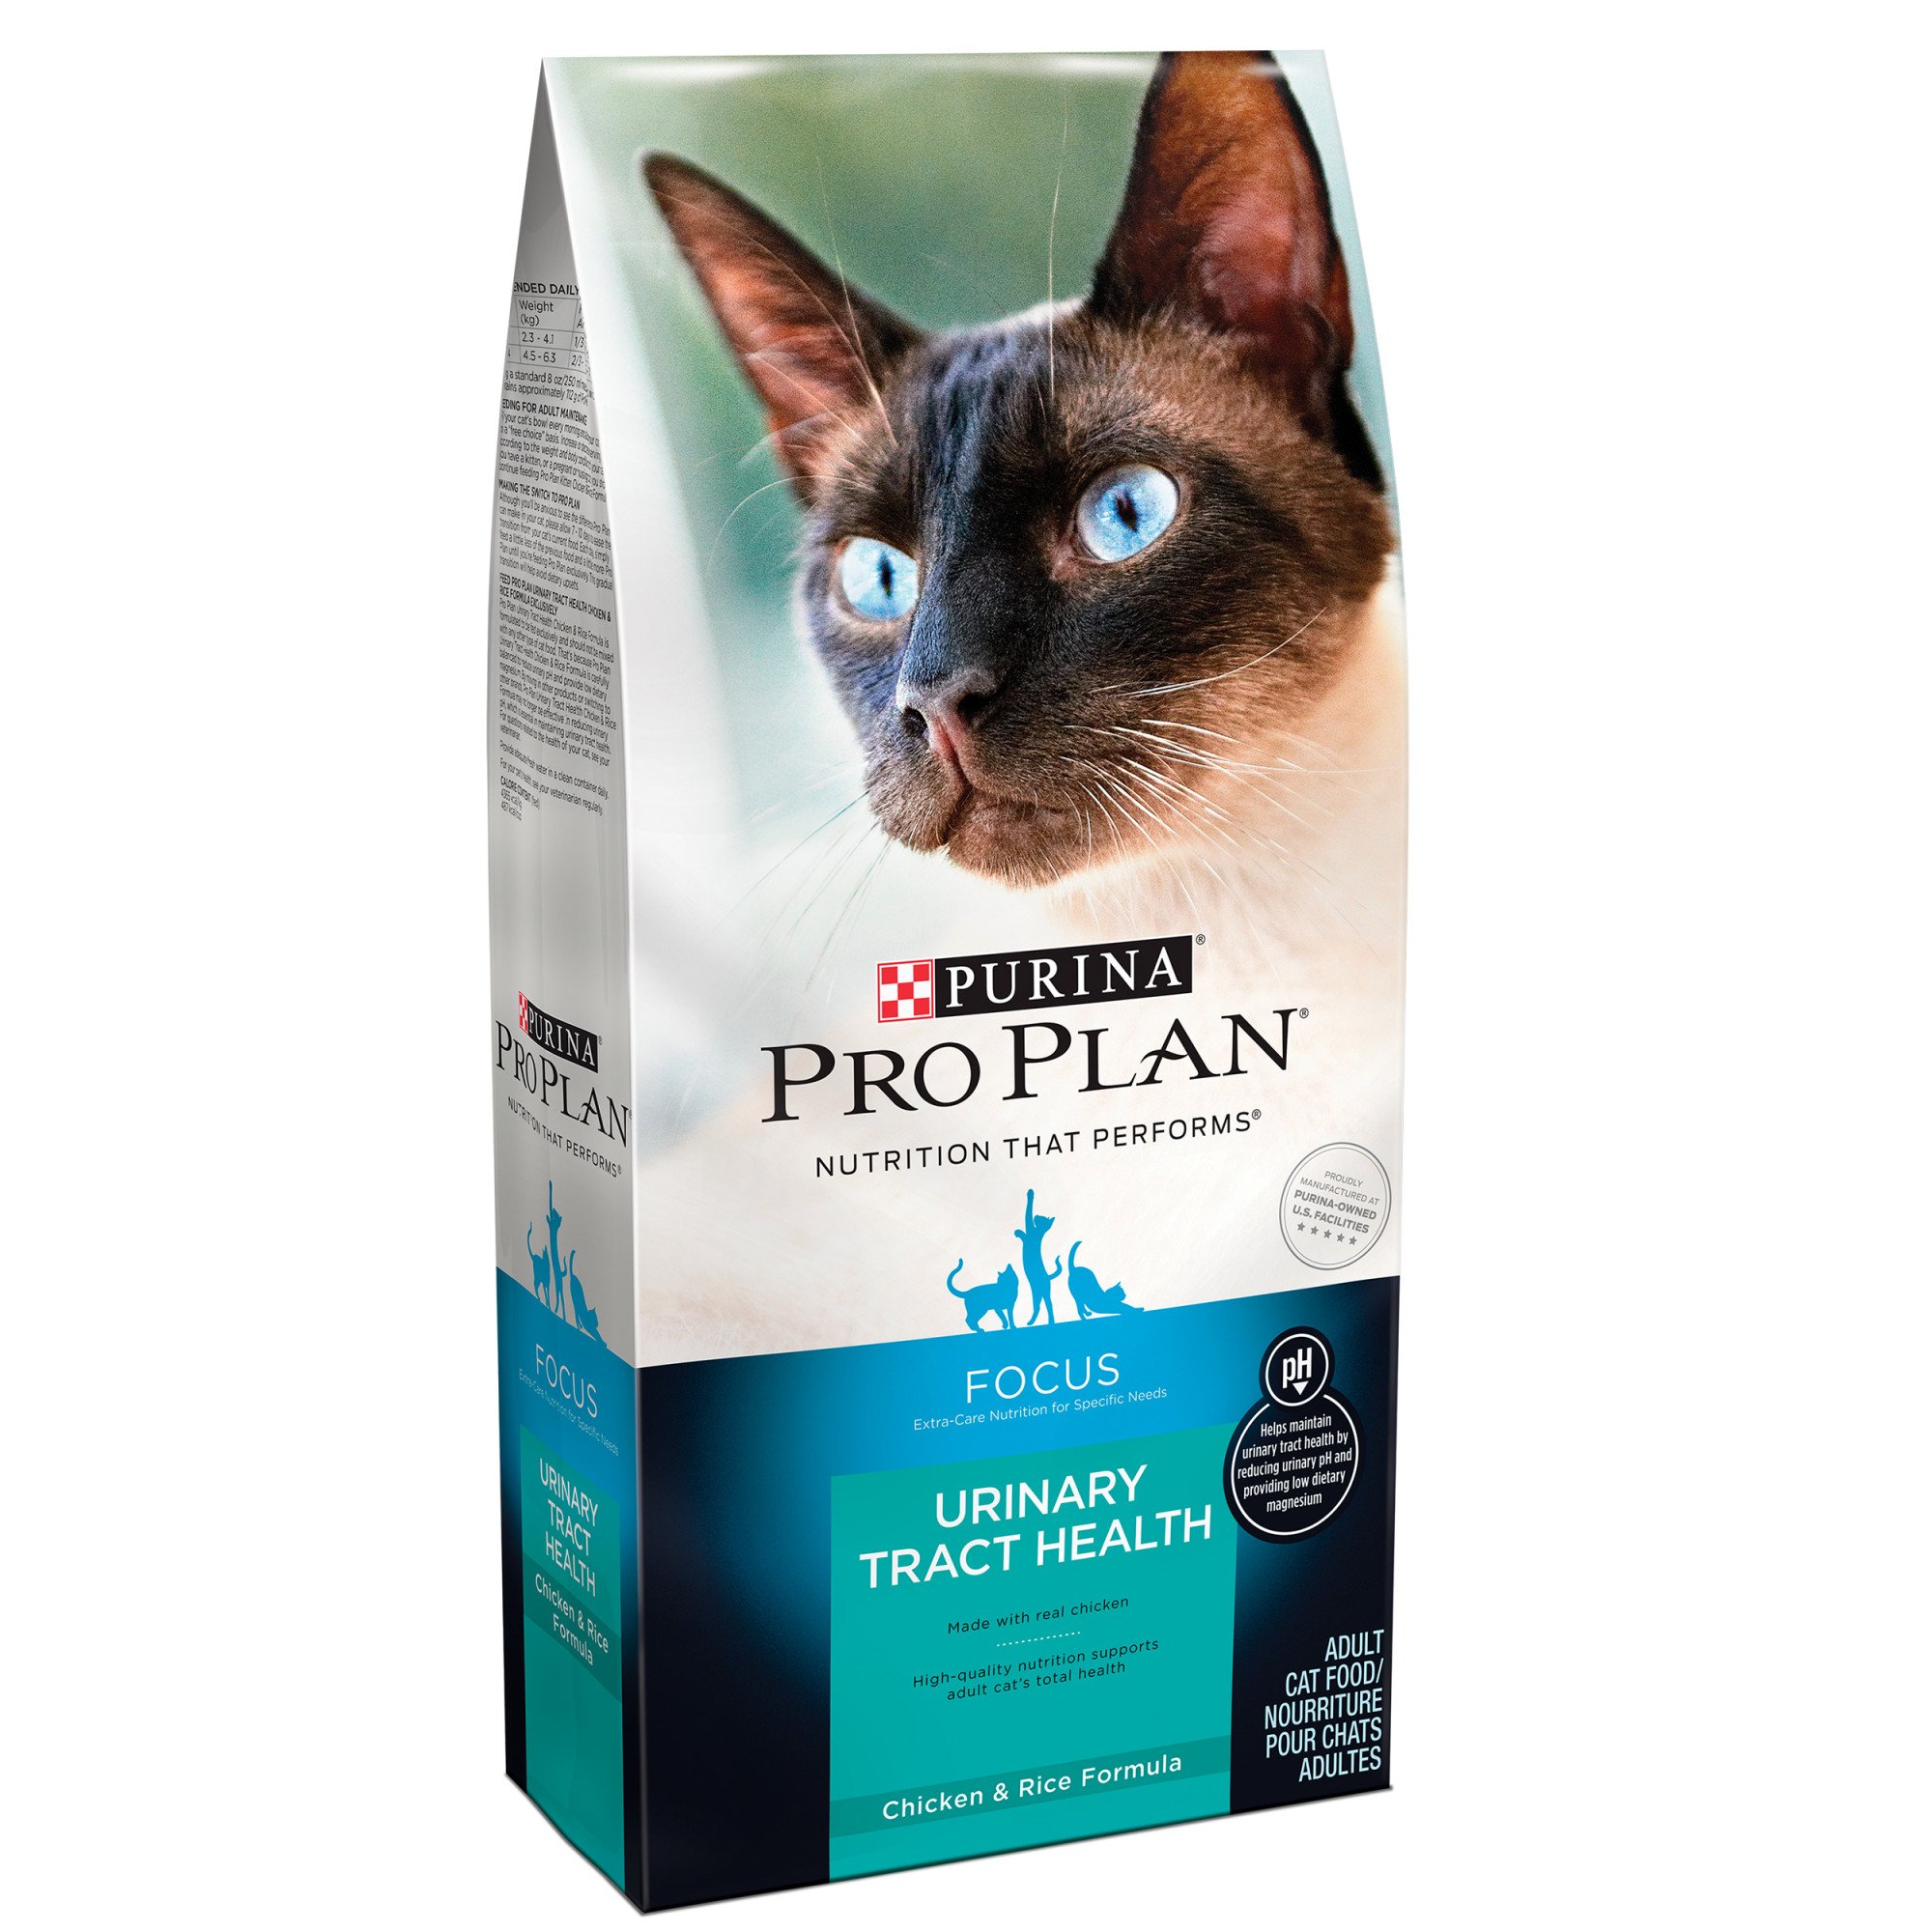 Pro Plan Focus Urinary Tract Health Cat Food | Petco